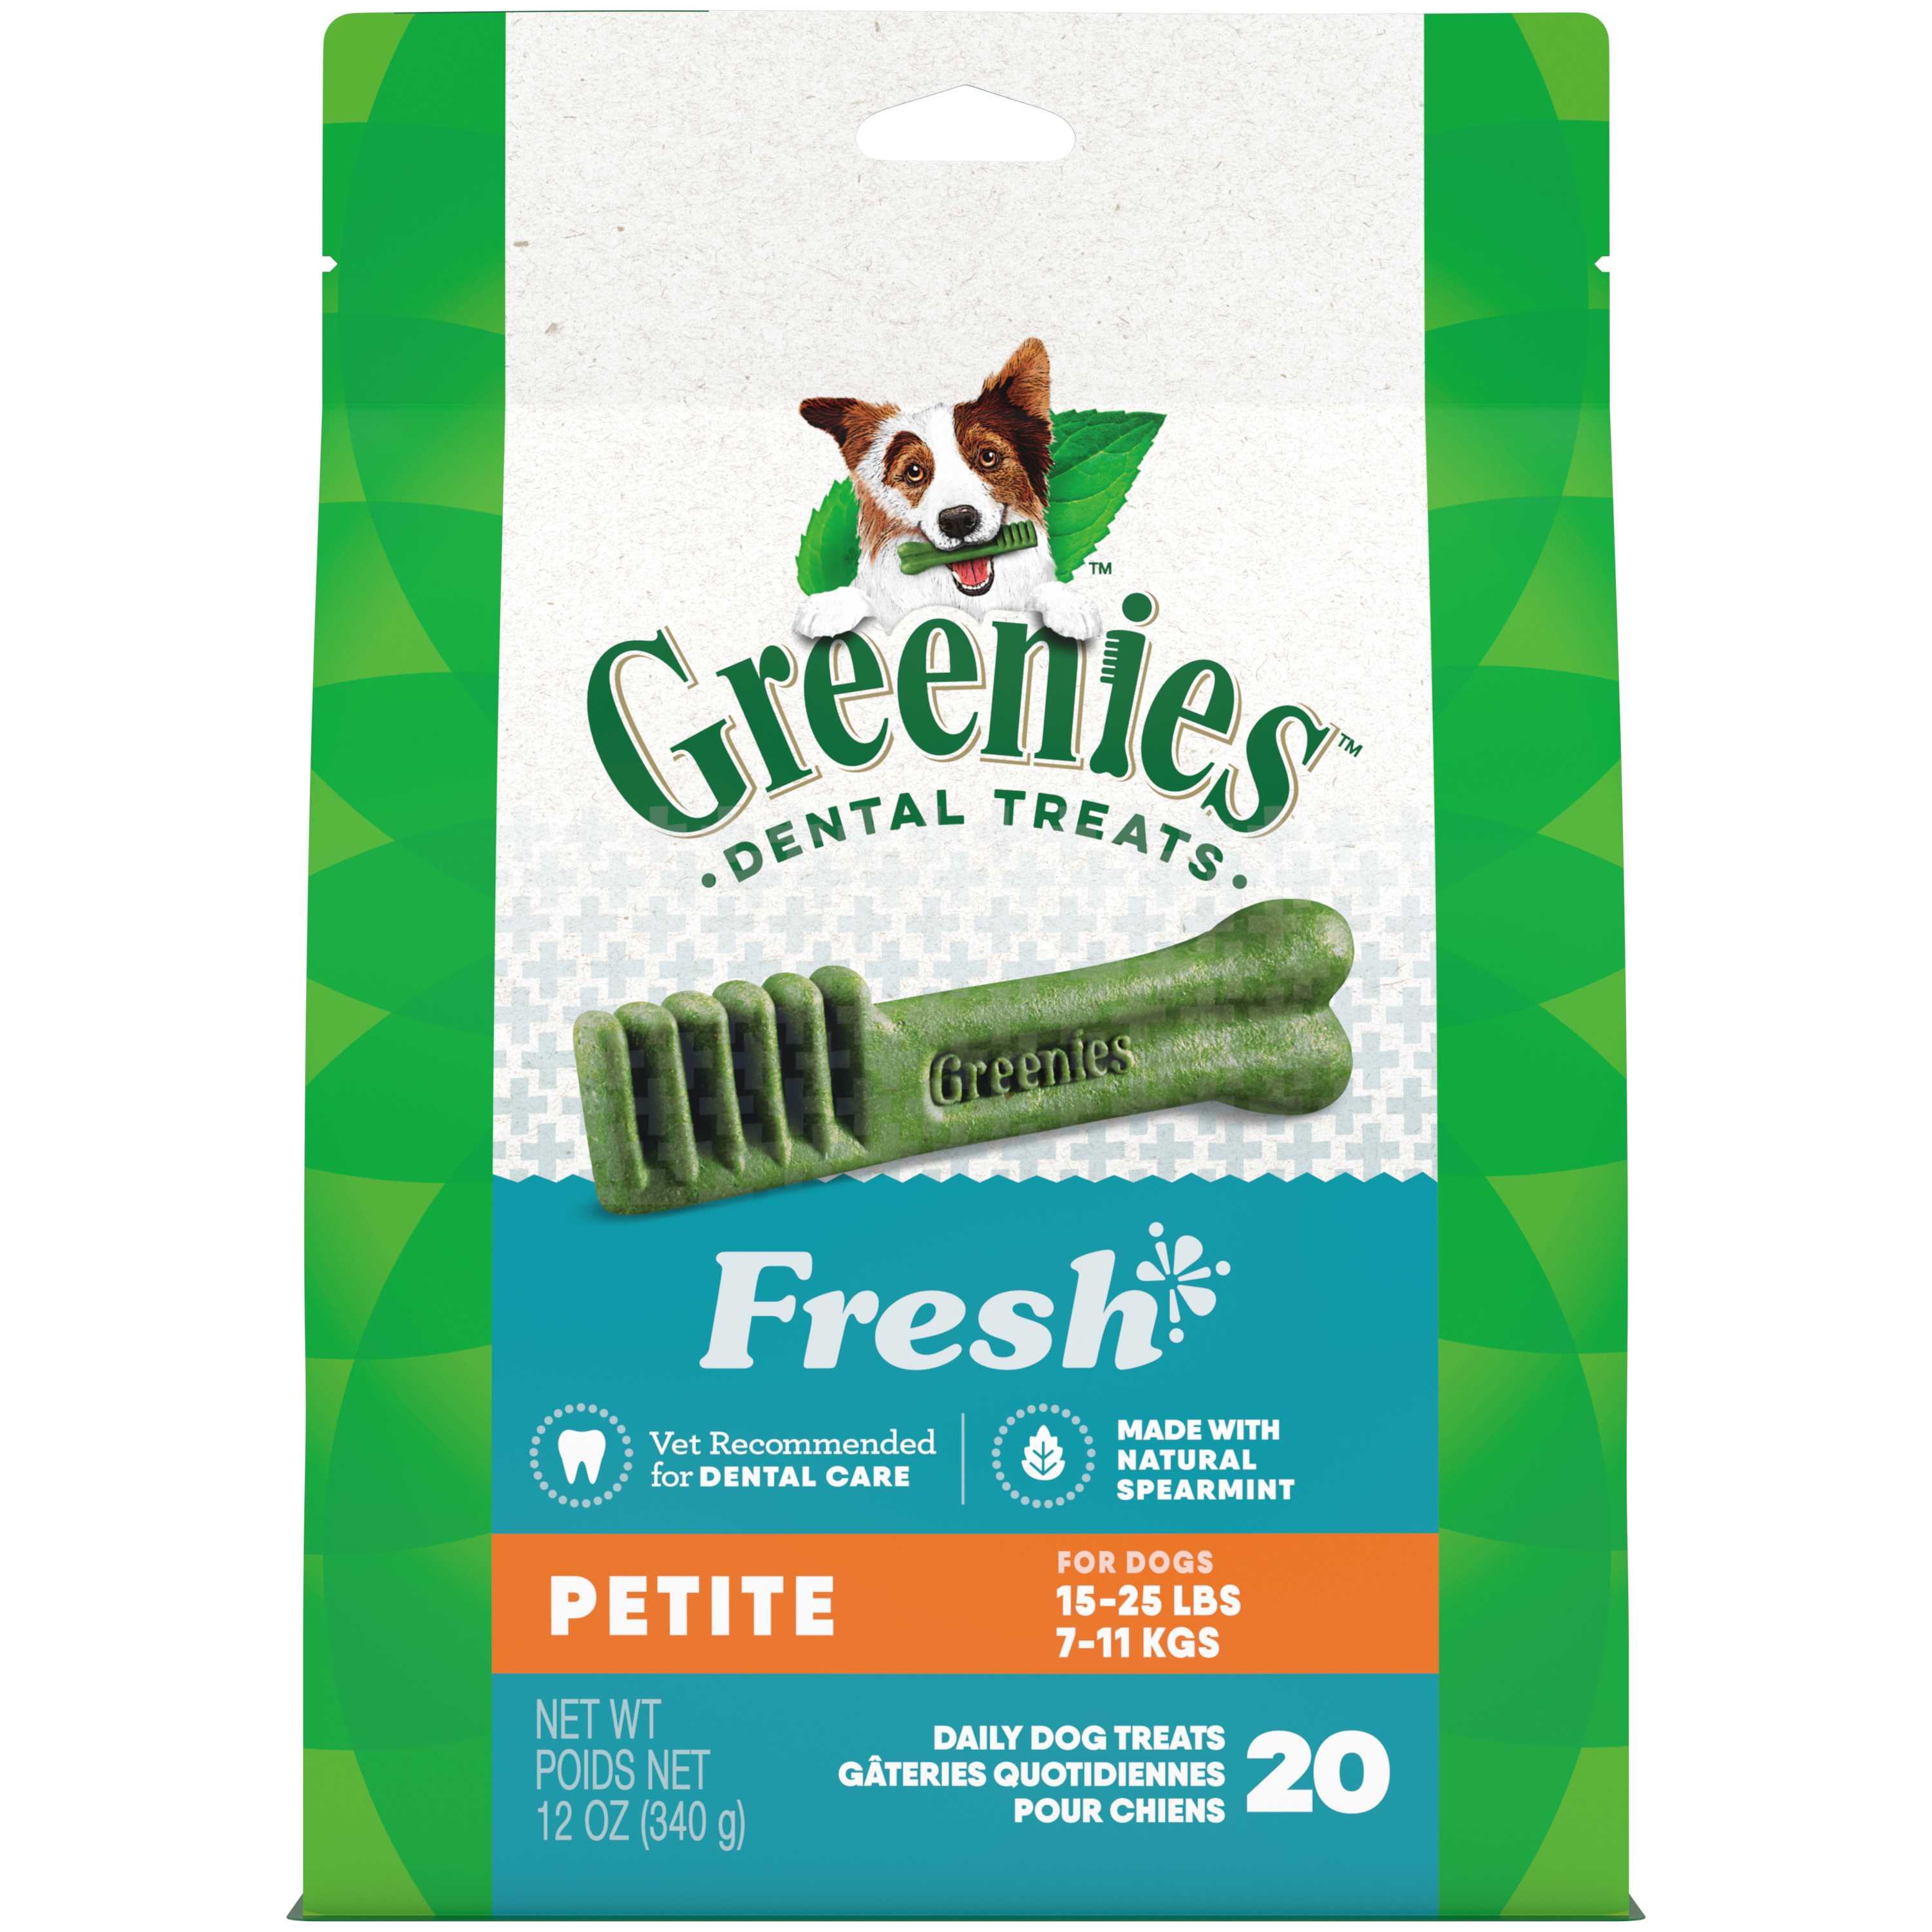 12 oz. Greenies Petite Fresh Treat Pack - Health/First Aid